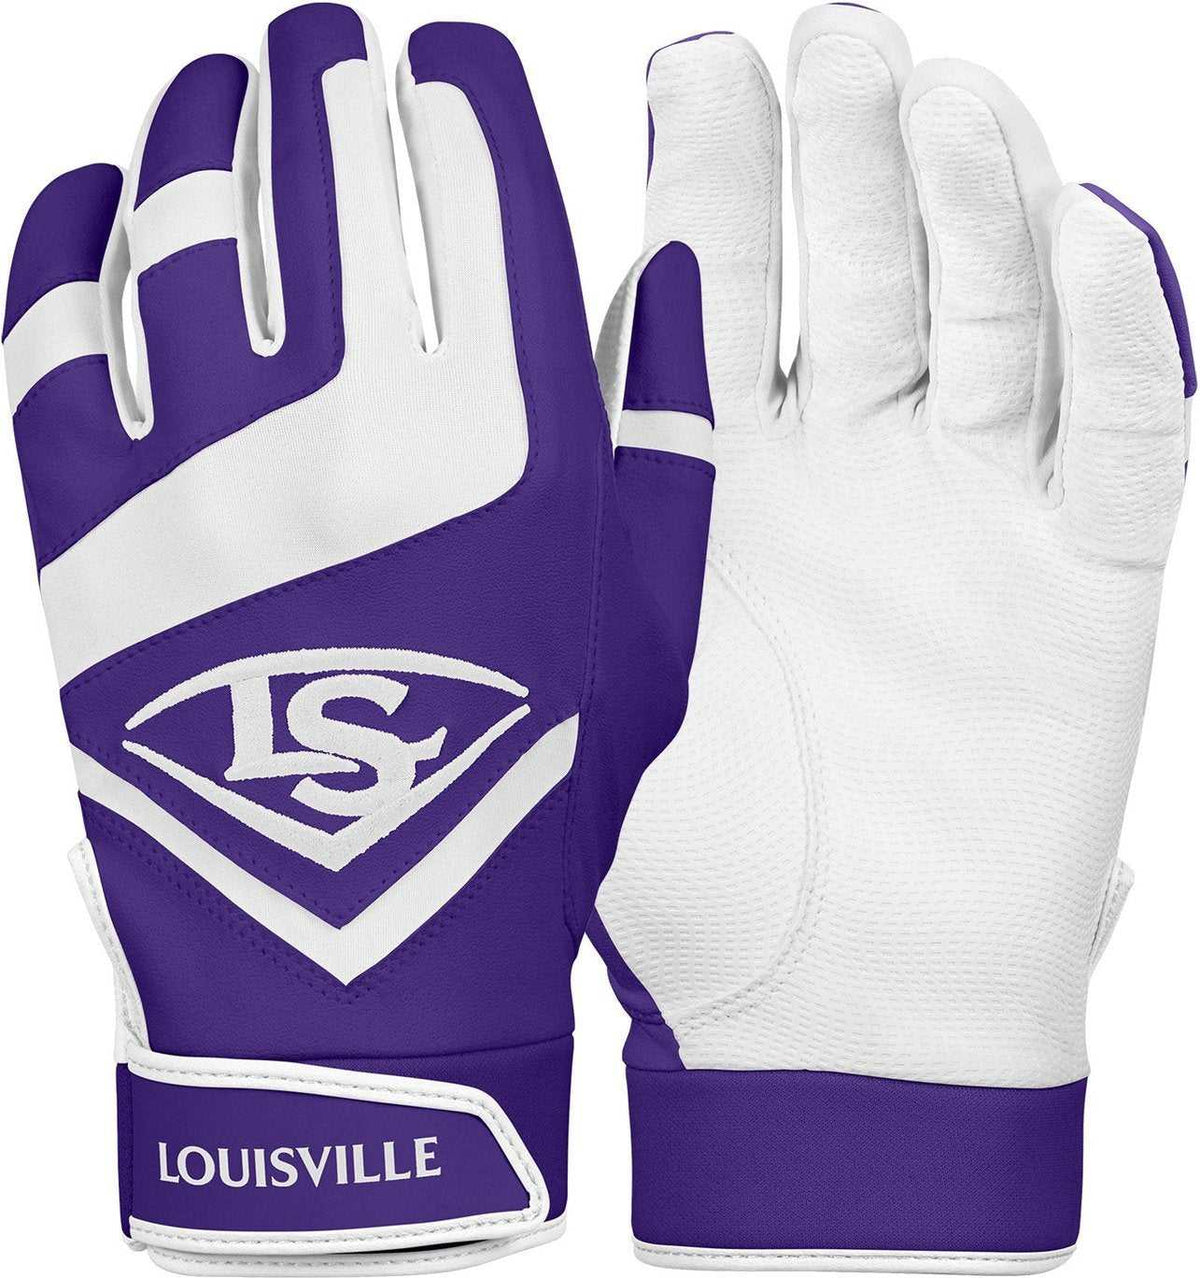 Louisville Slugger Genuine Batting Gloves - Purple - HIT A Double